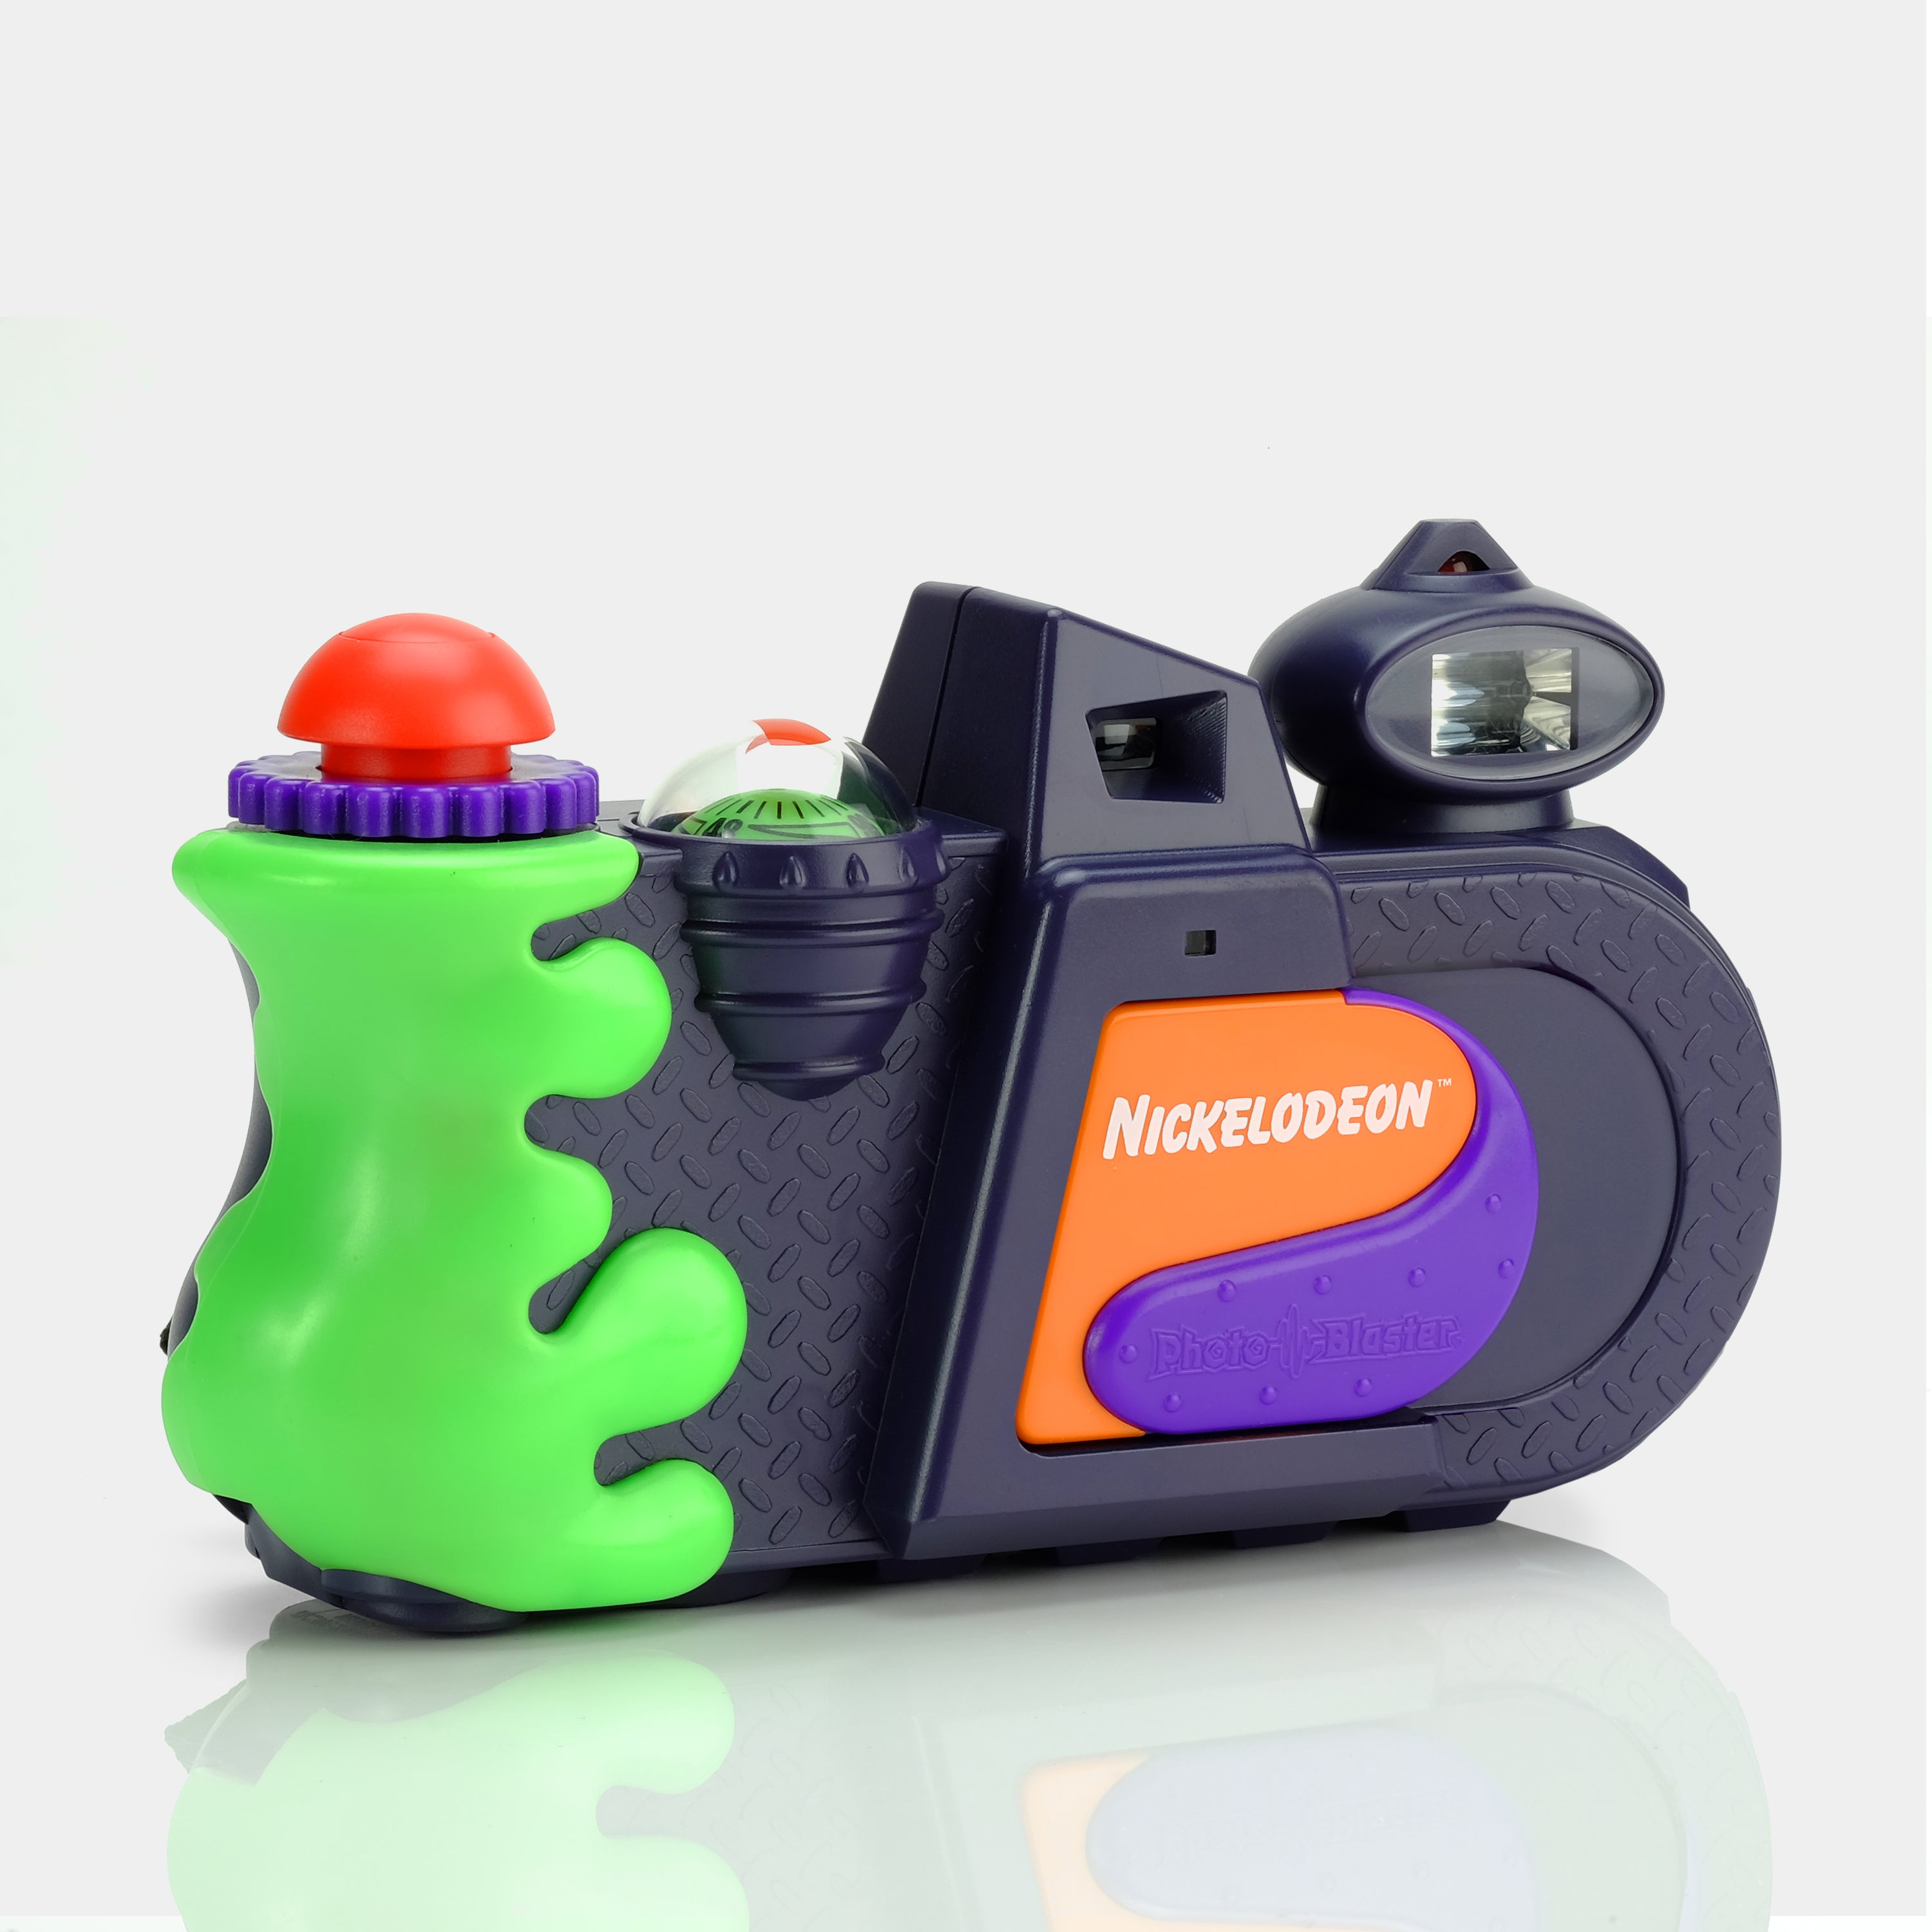 Nickelodeon Photo Blaster N6800 35mm Point and Shoot Film Camera